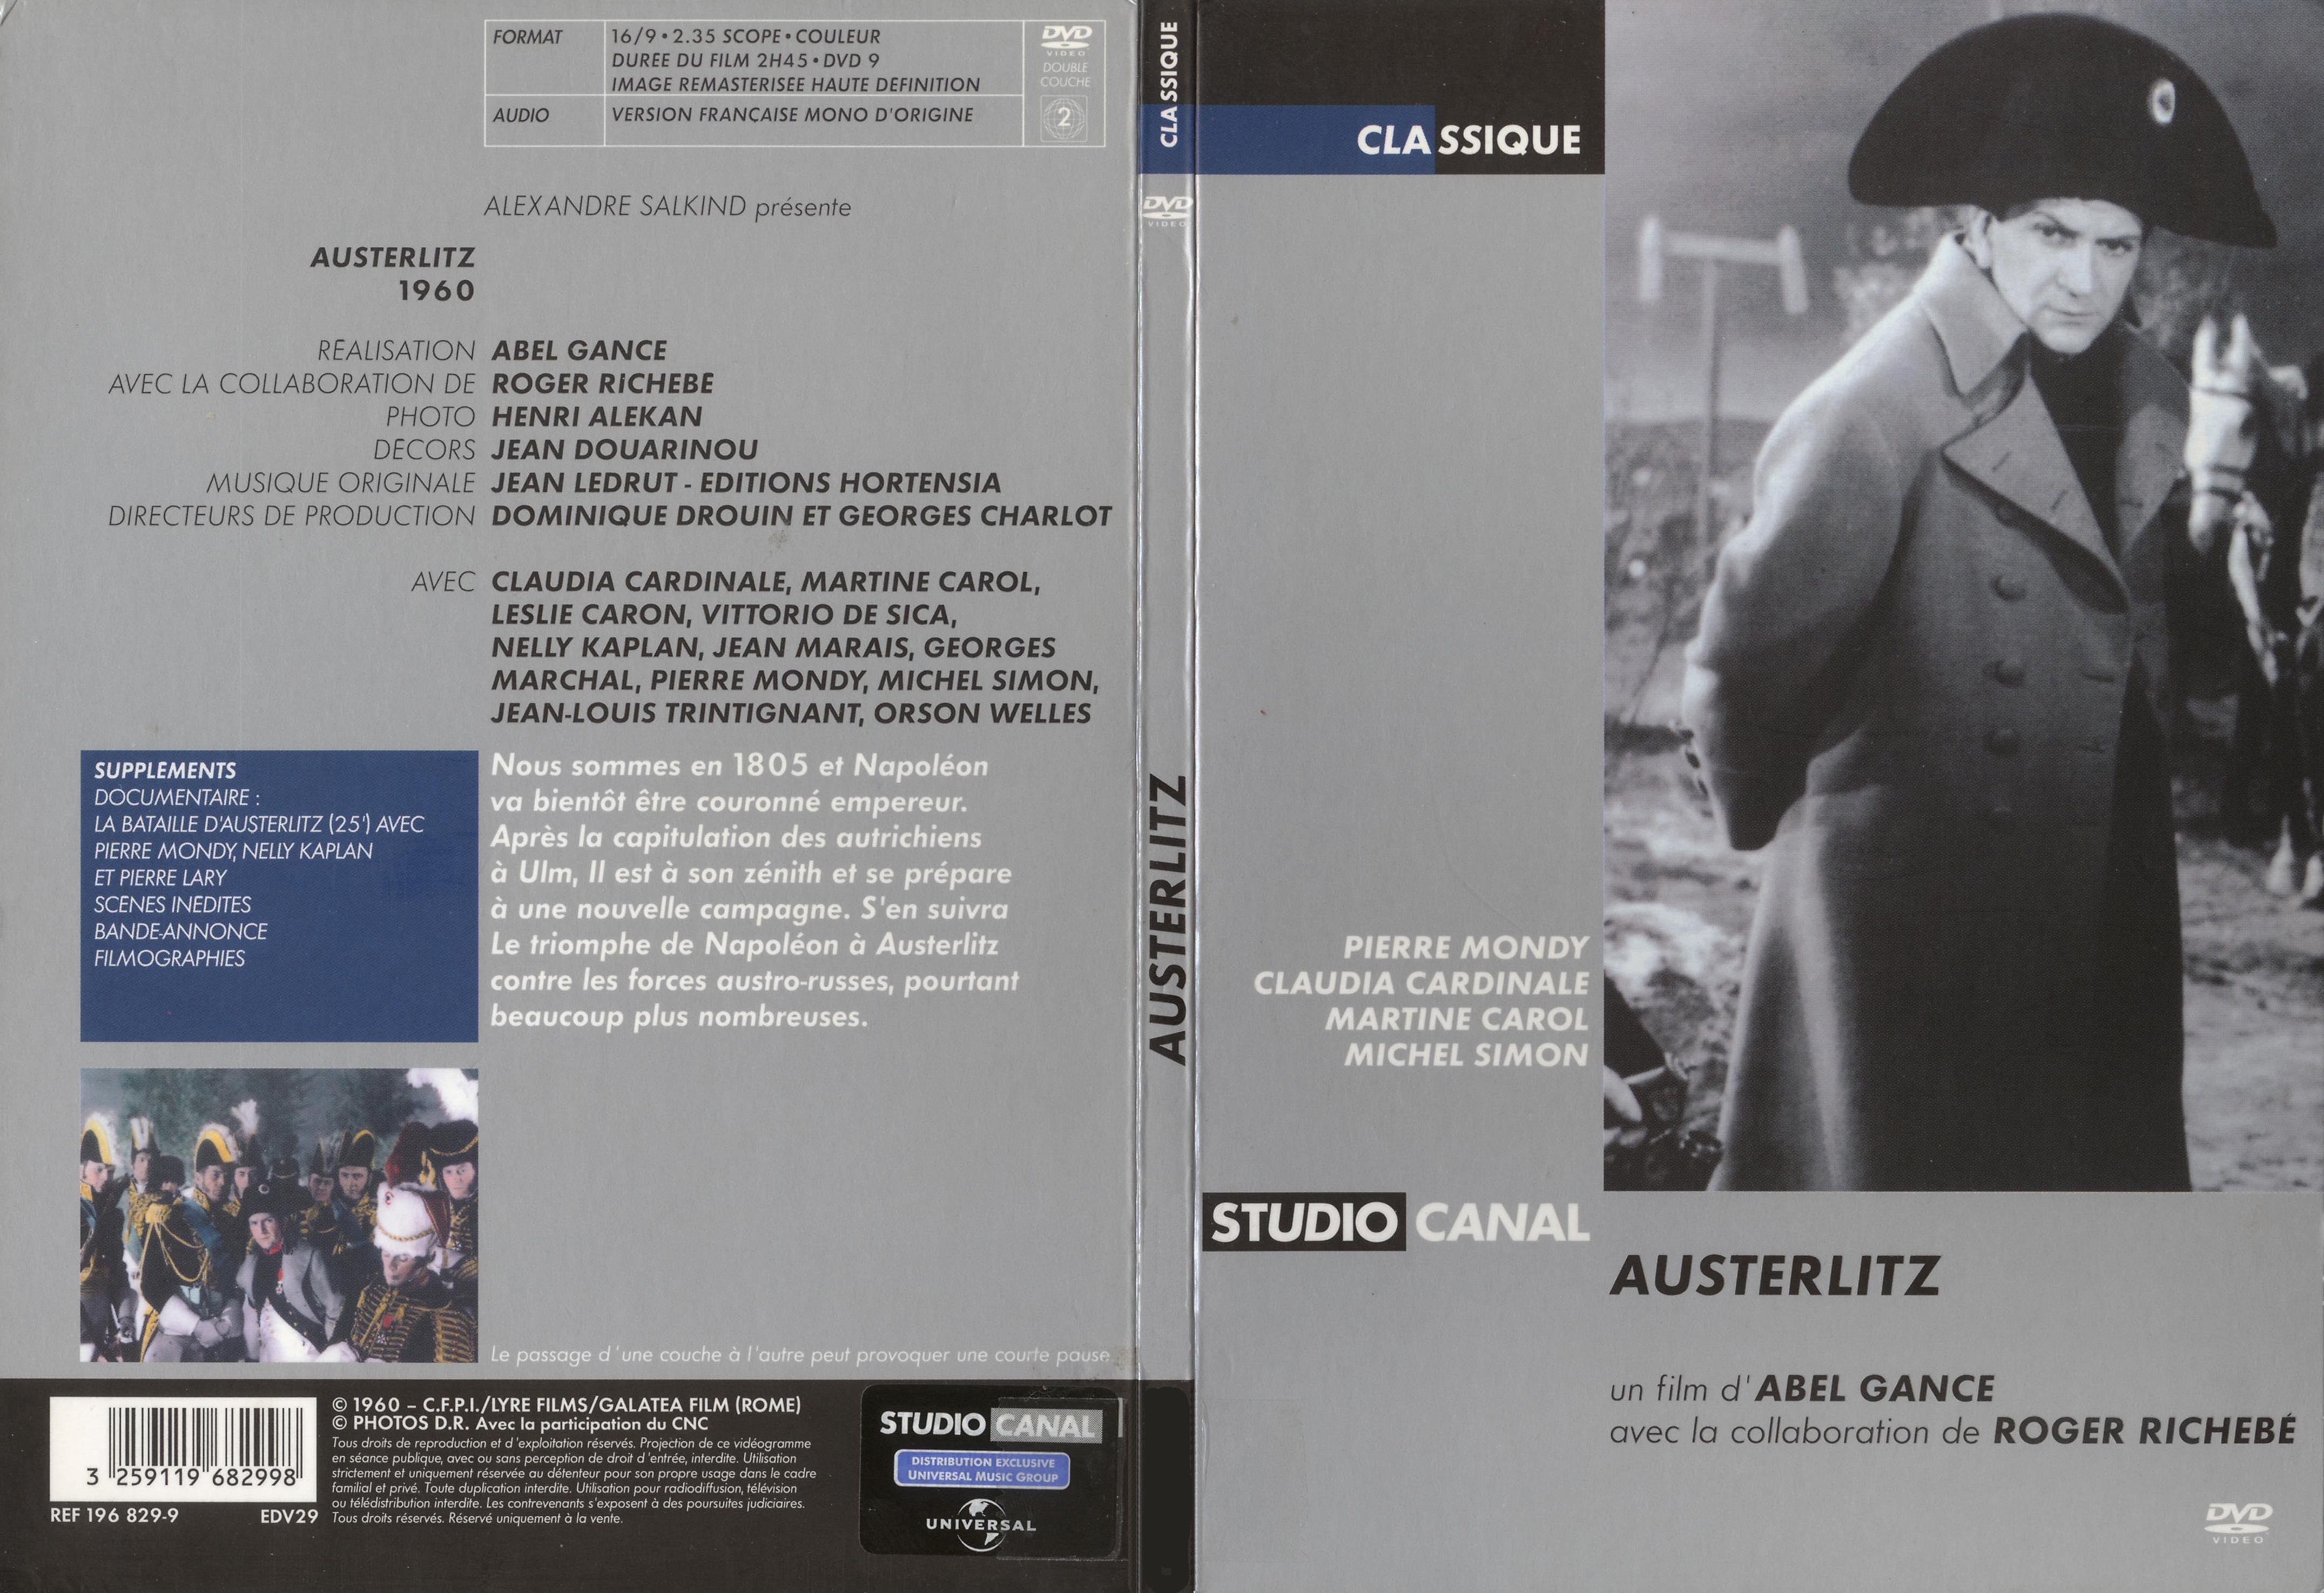 Jaquette DVD Austerlitz v2